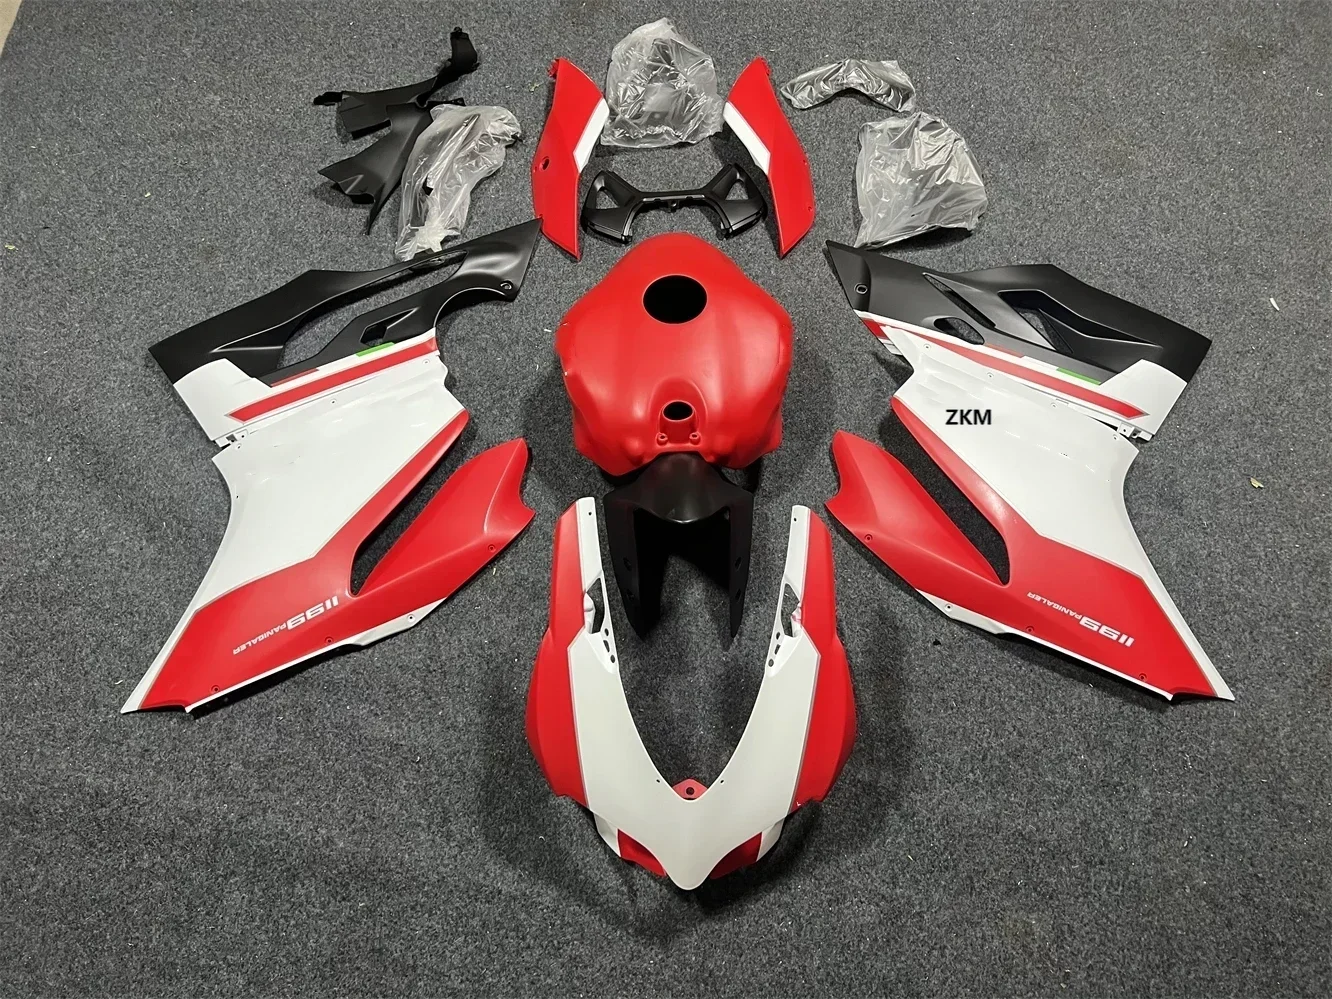 

Motorcycle Fairings Kit Fit for Ducati 899 1199 2012 2013 2014 Panigale 959 1299 2015 2016 2017 2018 full Fairing set red white